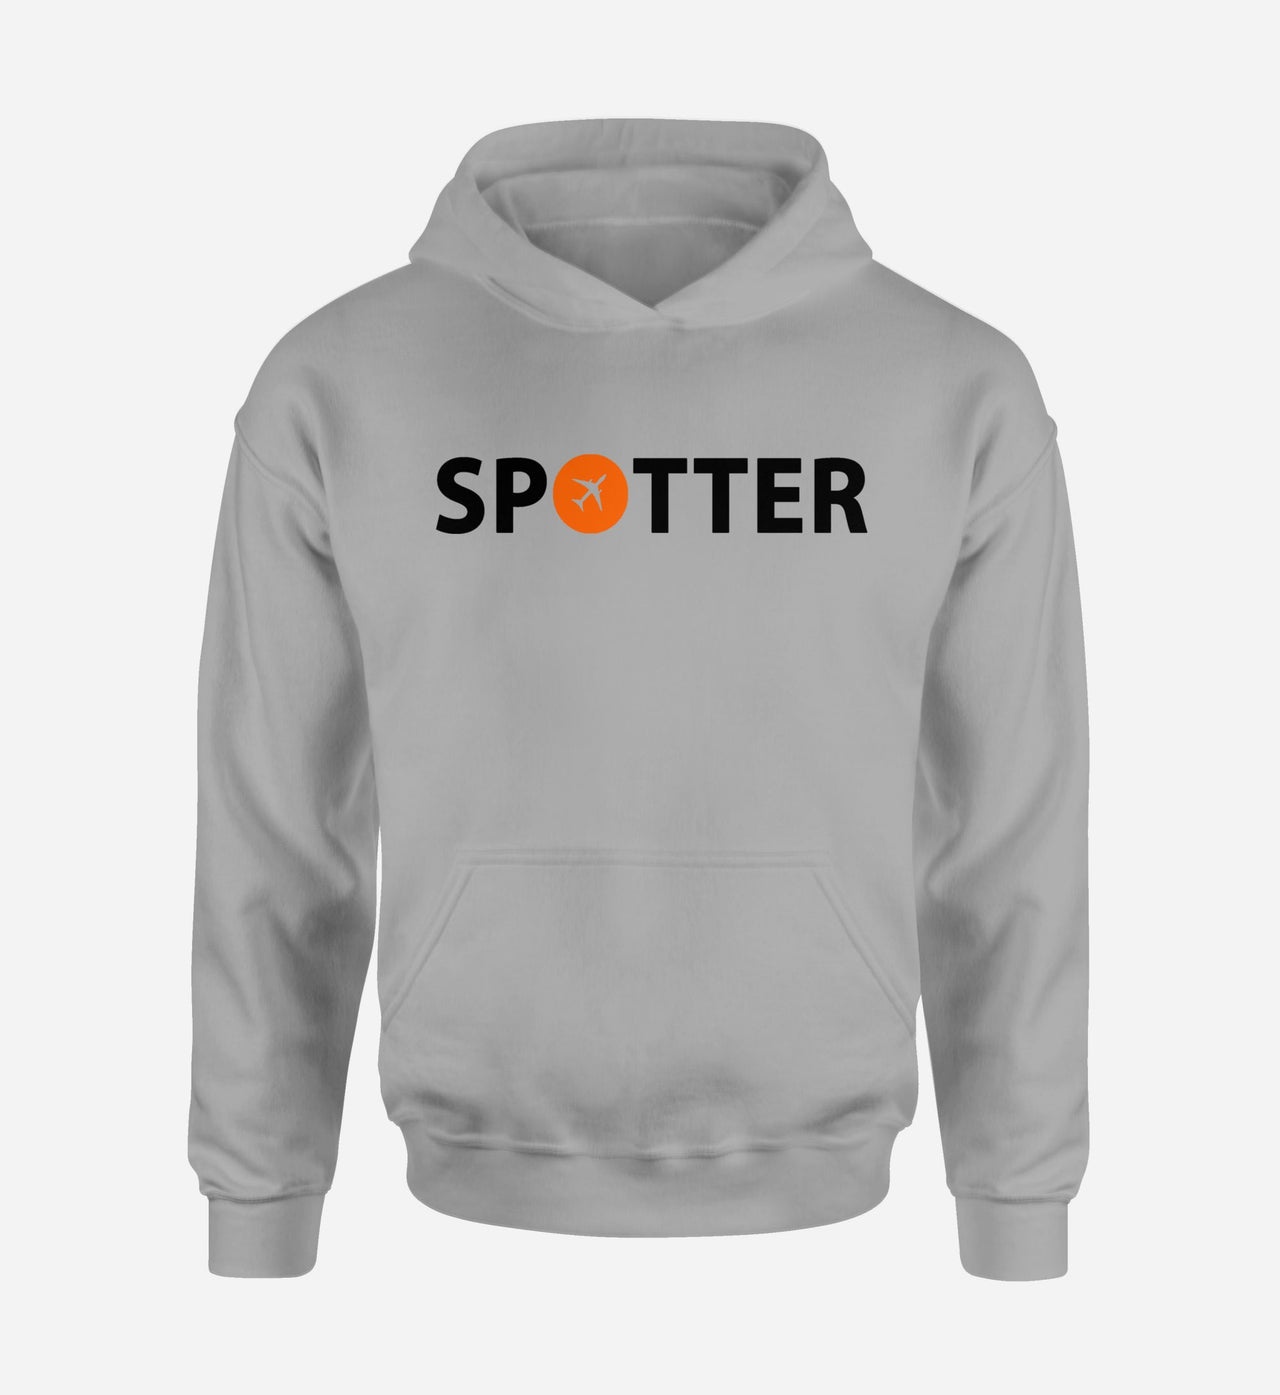 Spotter Designed Hoodies